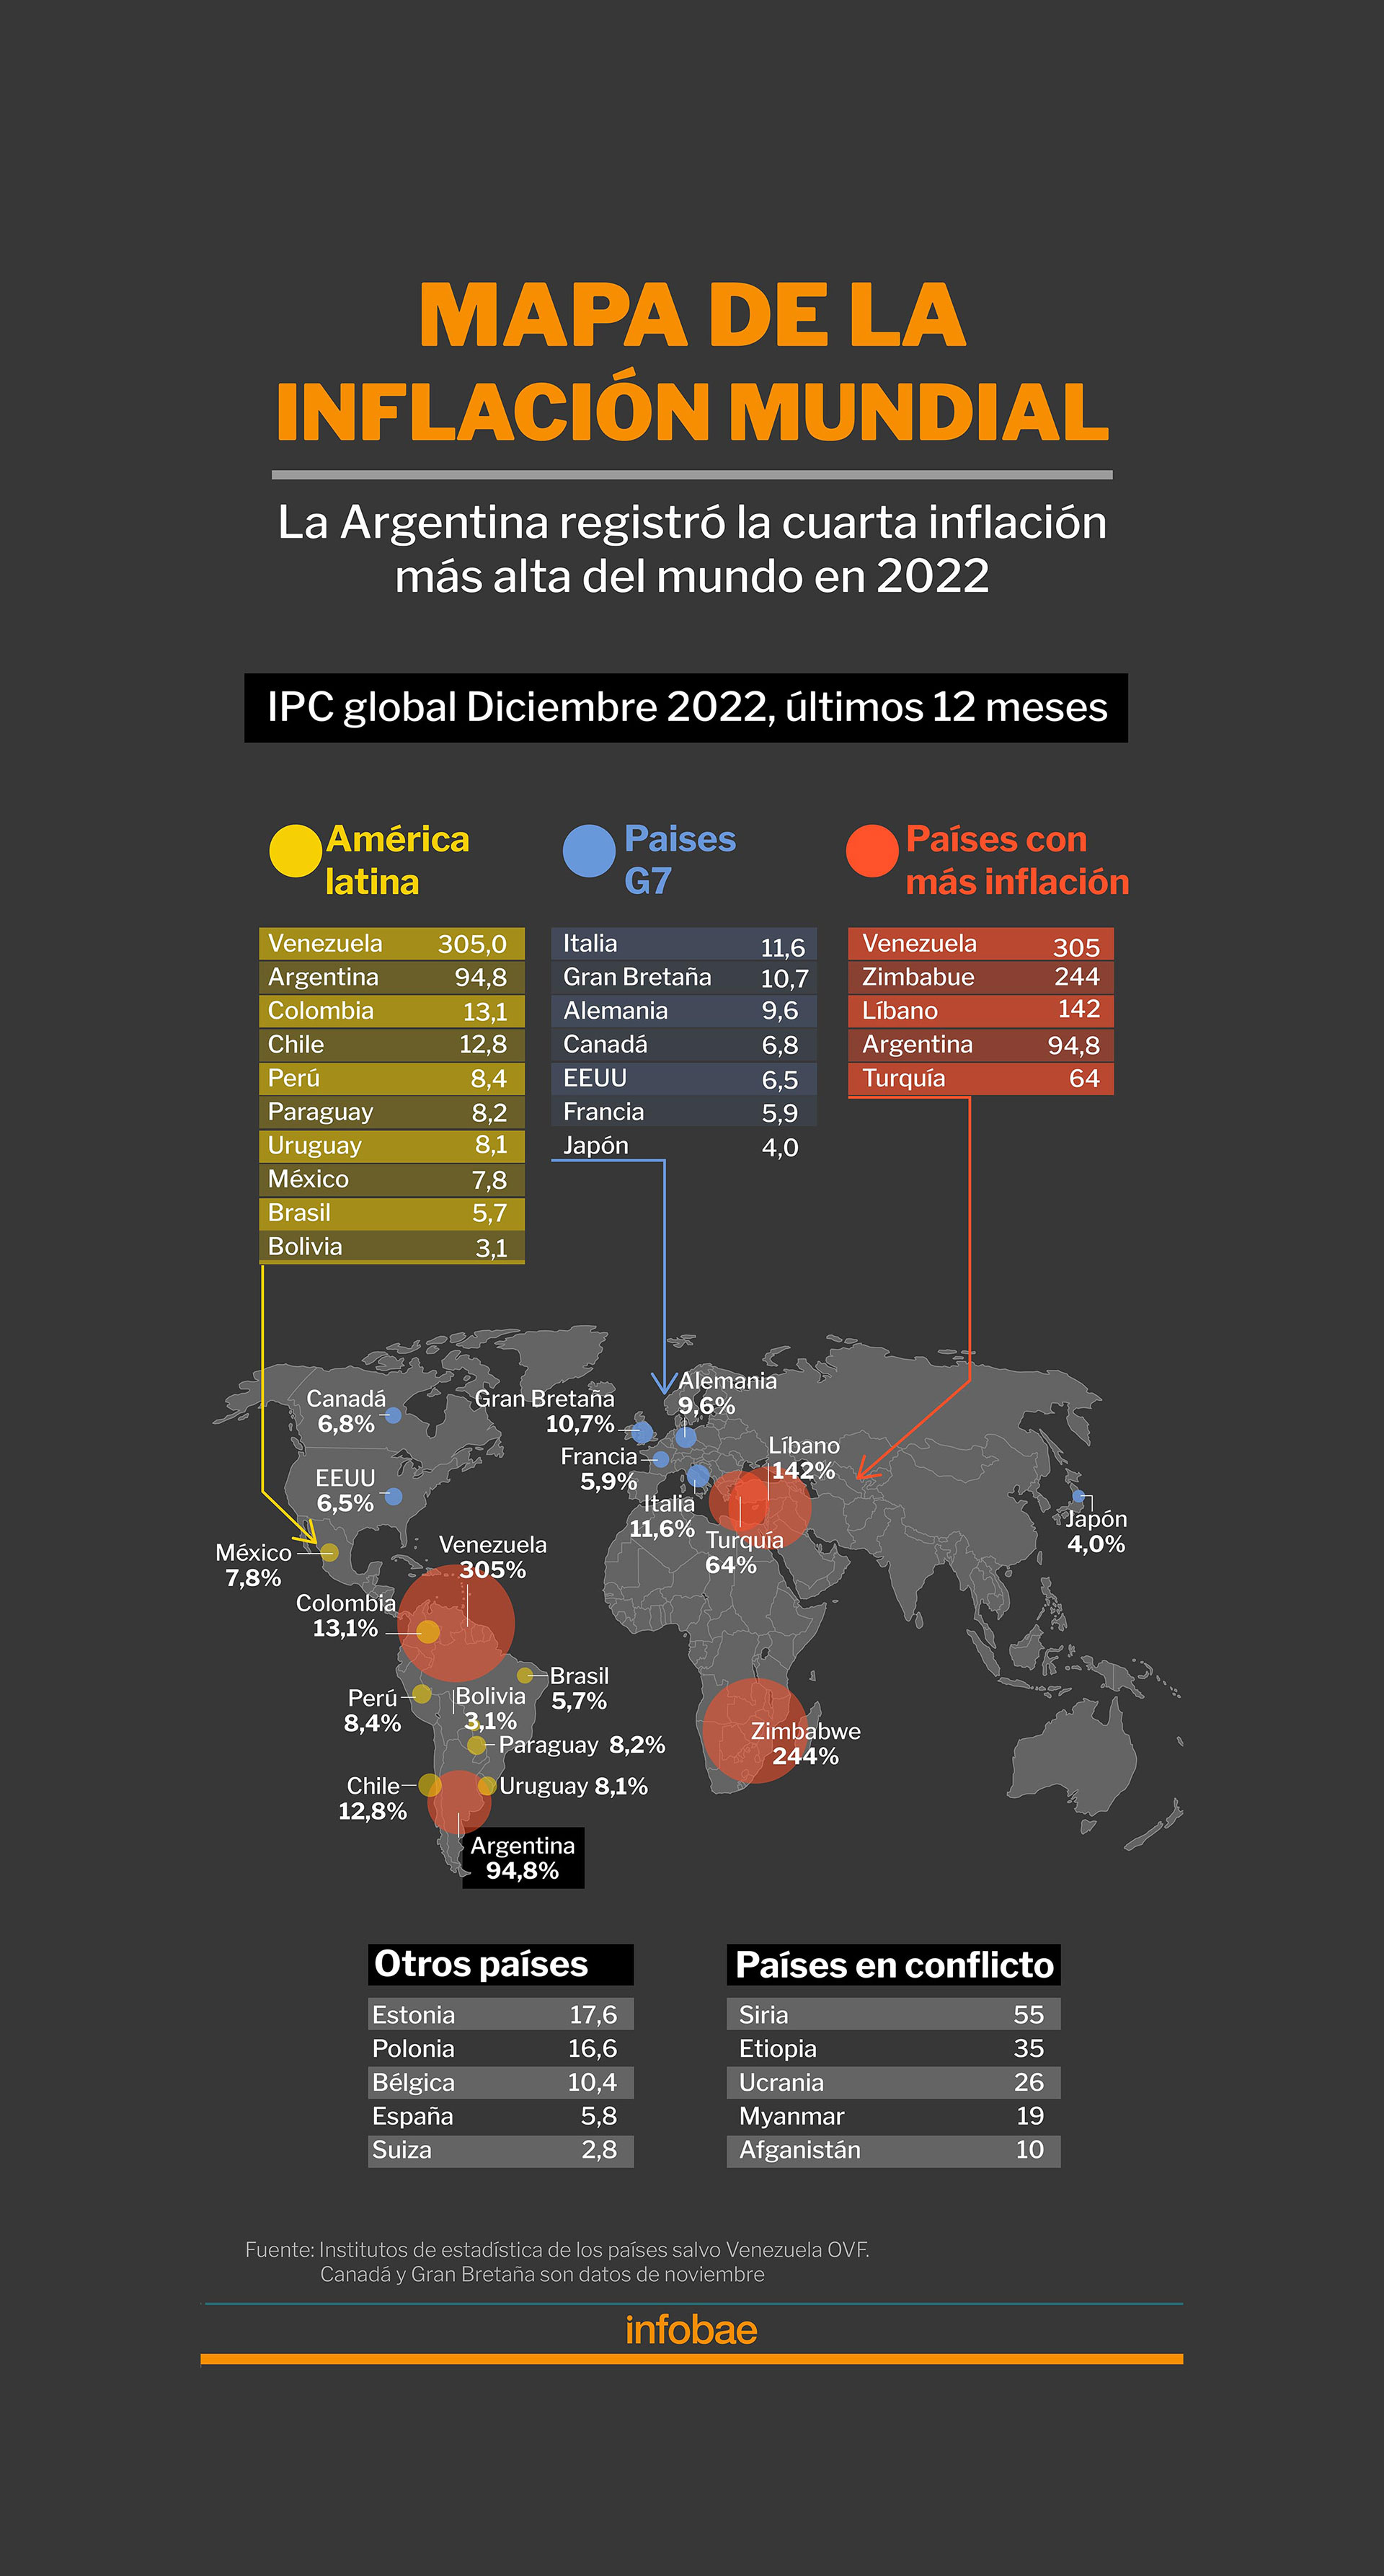 Inflación mundial en un grupo seleccionado de países en 2022
Infografía de Marcelo Regalado